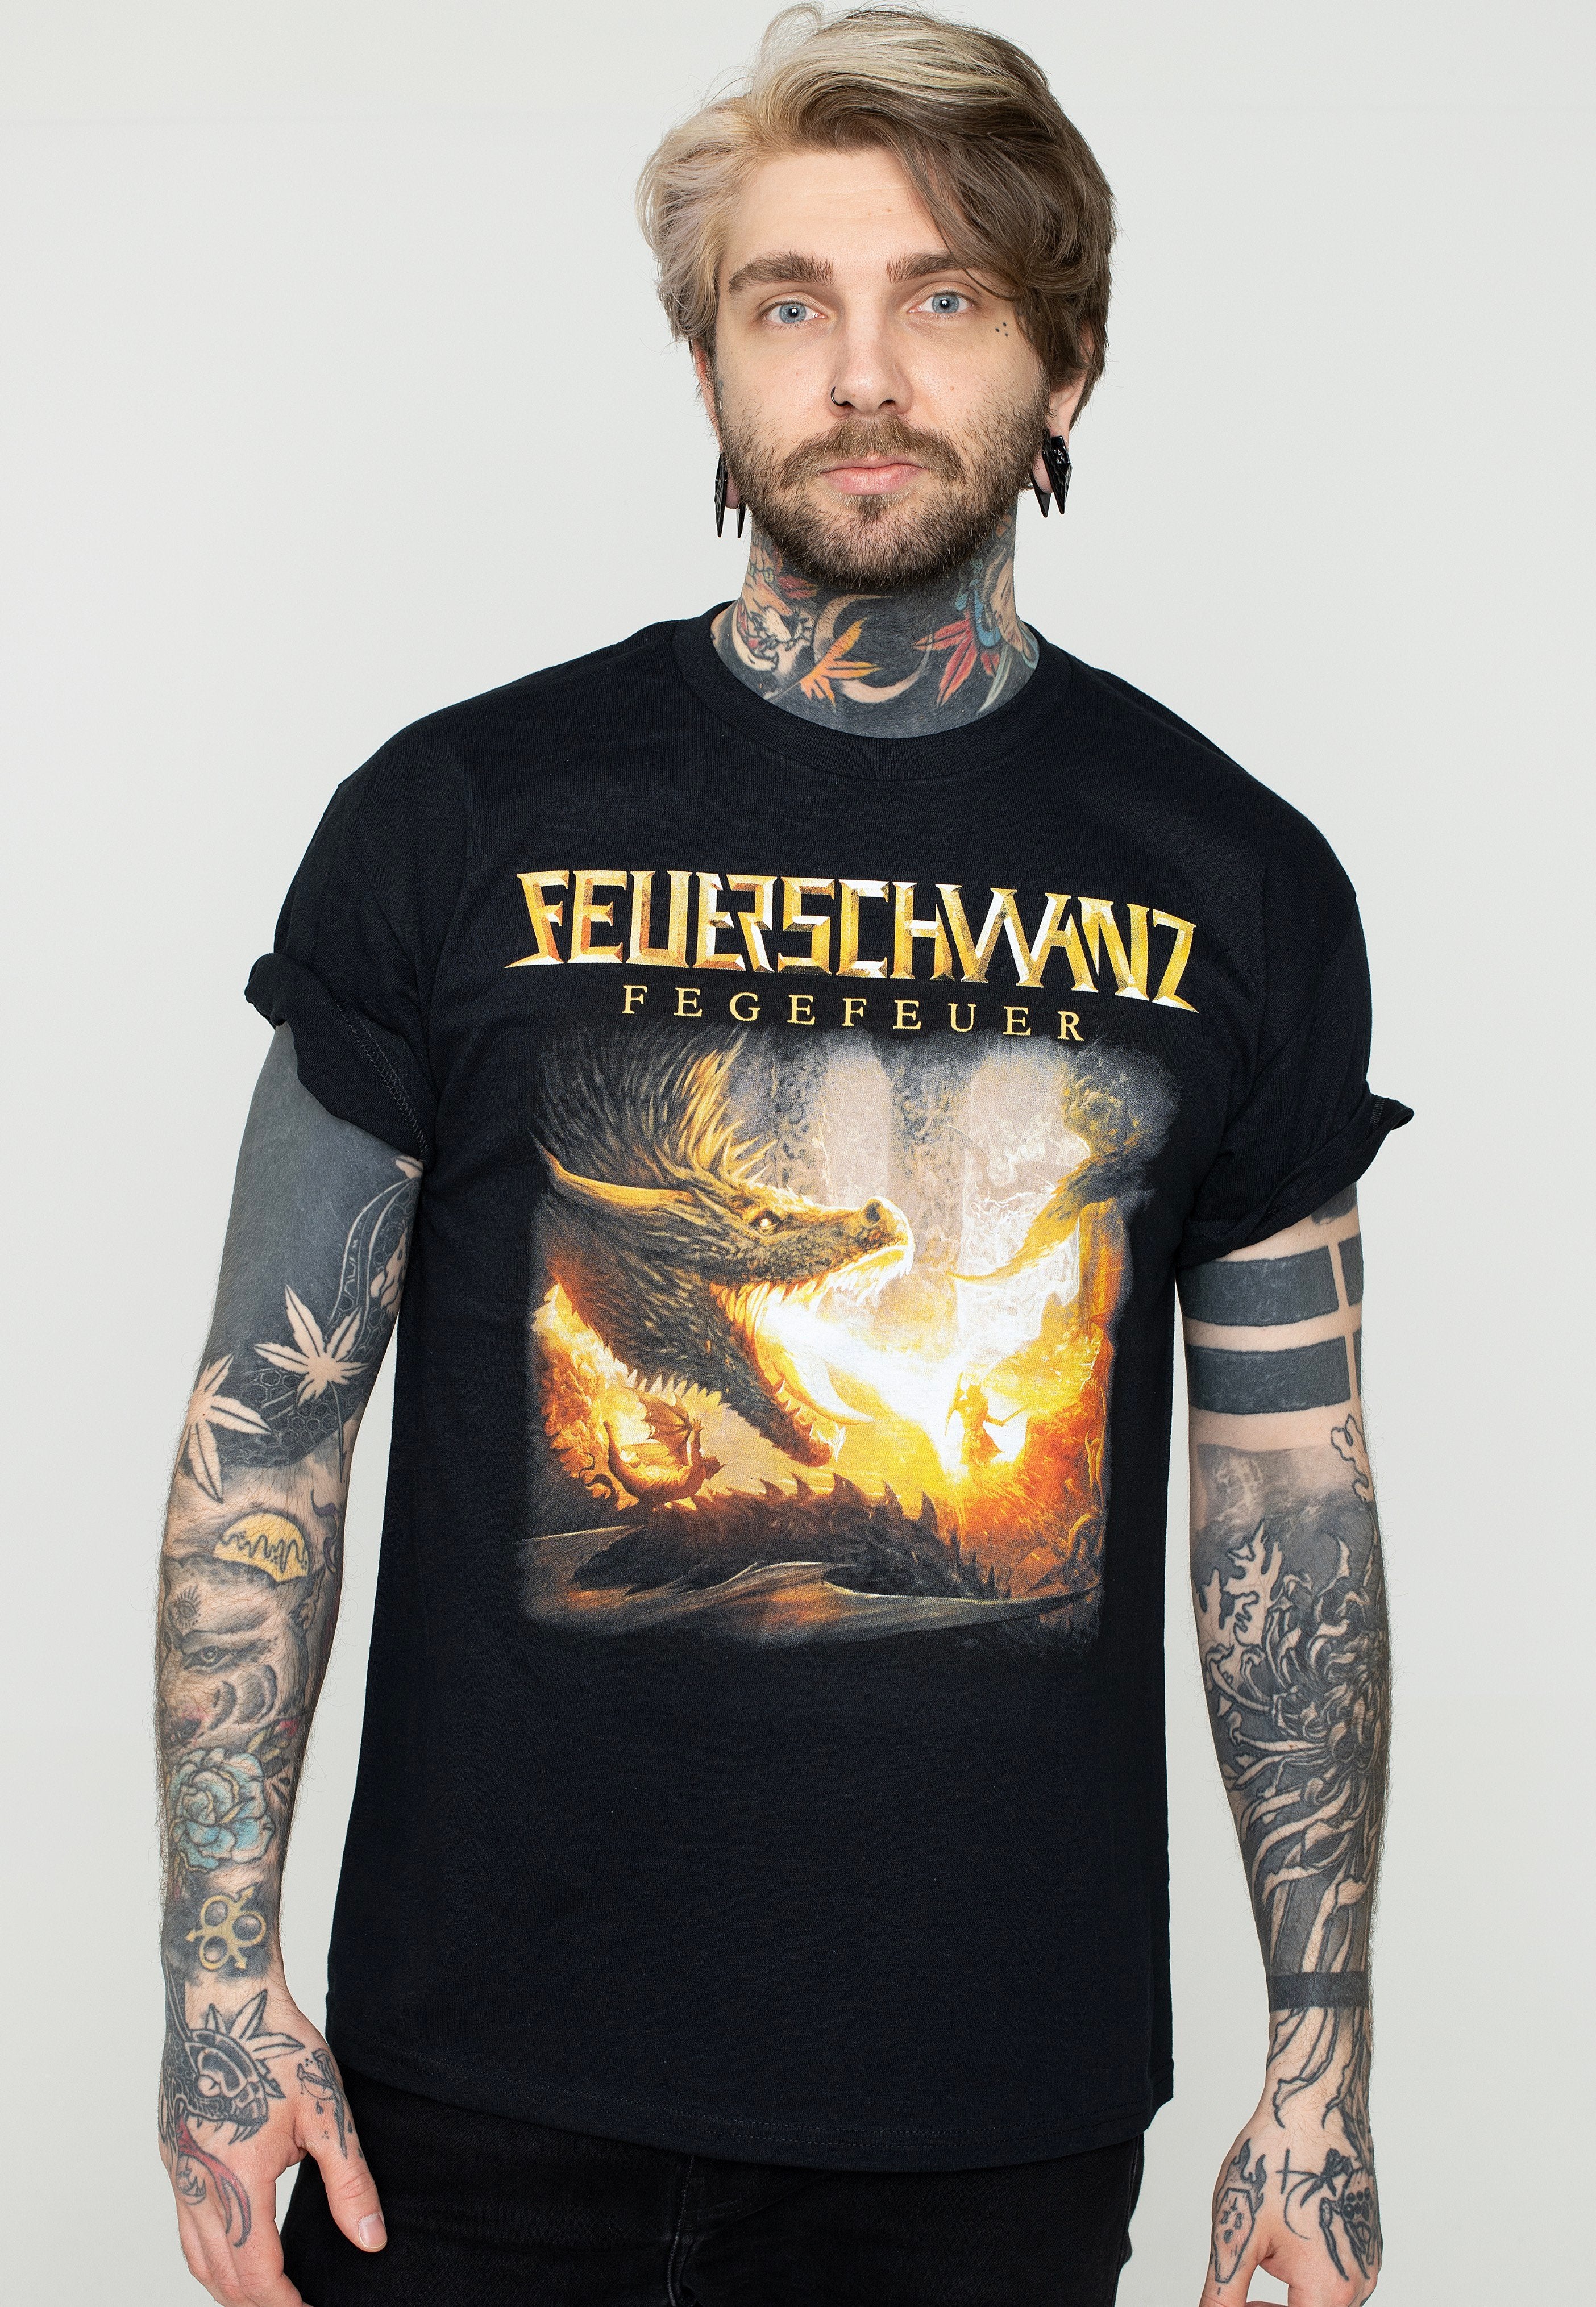 Feuerschwanz - Fegefeuer - T-Shirt